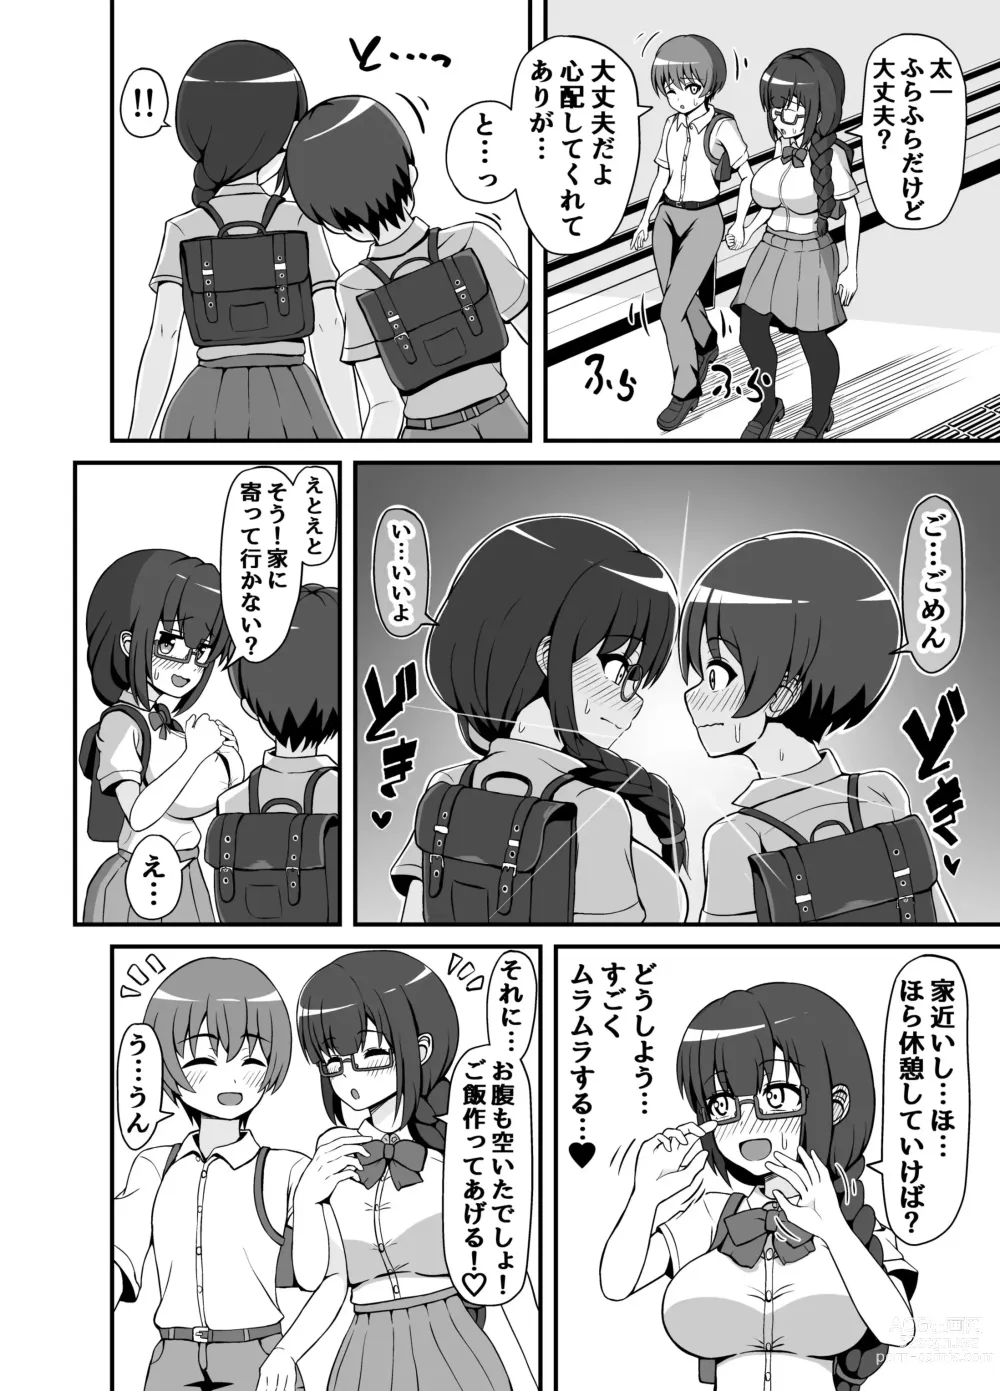 Page 38 of doujinshi 罰ゲームで告白した陰キャ彼女がドSだった件